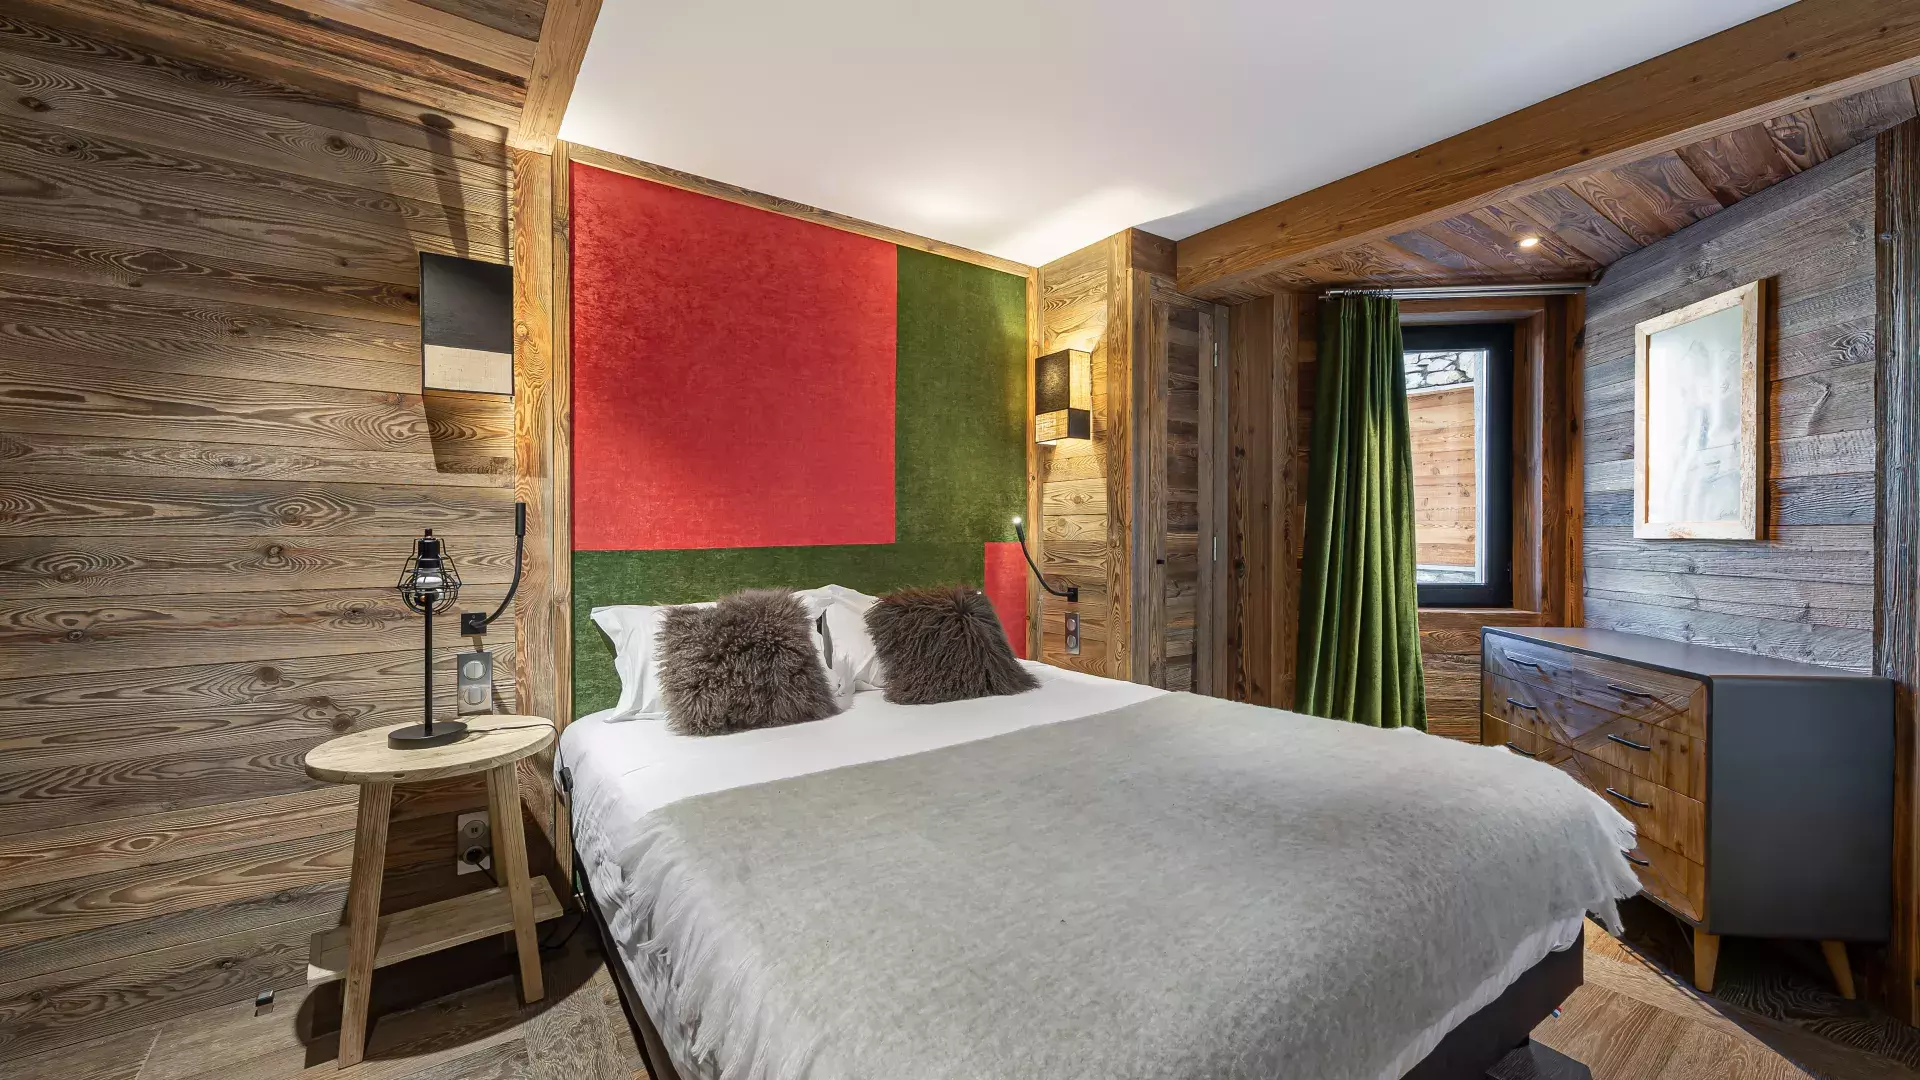 Appartement Sifflote 10 - Location chalets Covarel - Val d'Isère Alpes - France - Chambre 1